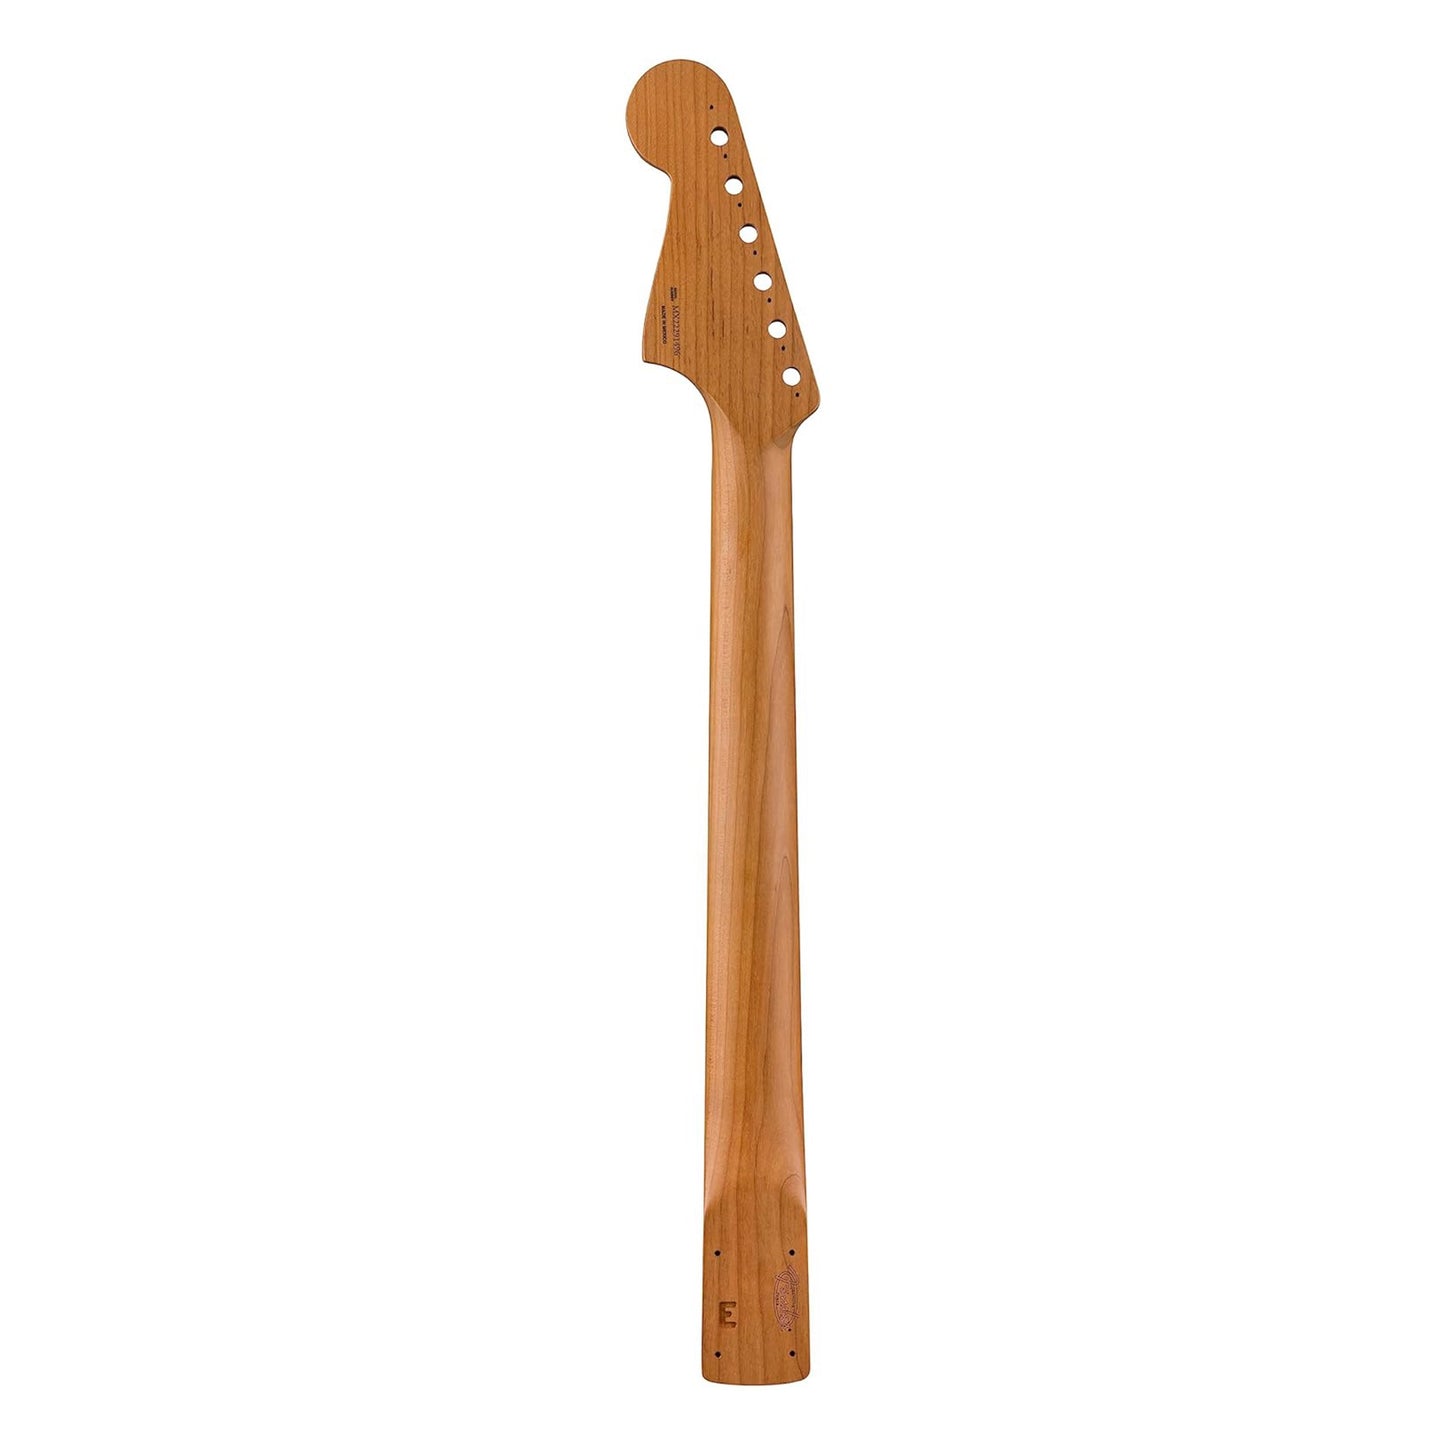 Fender Jazzmaster Roasted Maple Neck - Maple Fingerboard w/ Black Pearloid Block Inlays